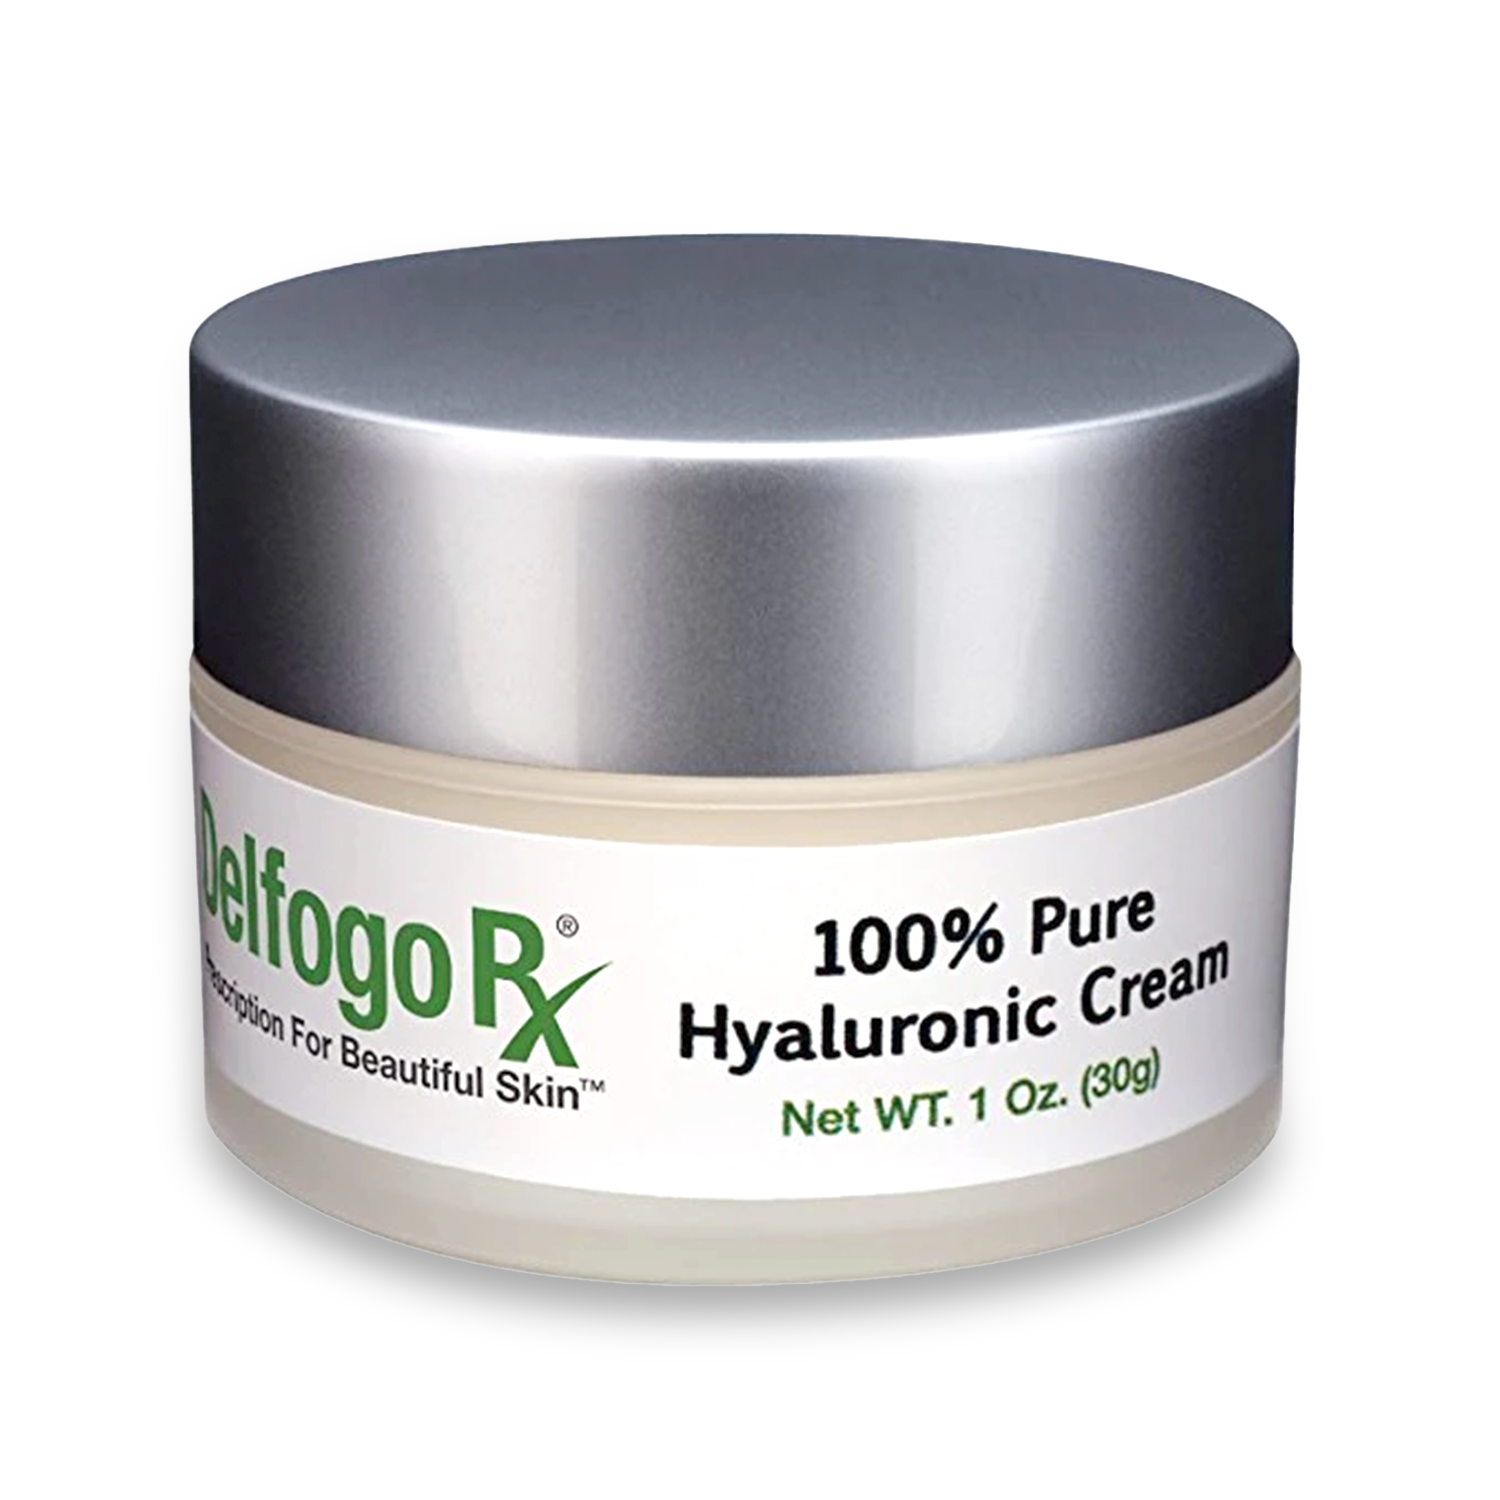 Delfogo Rx 100% Pure Hyaluronic Acid Cream